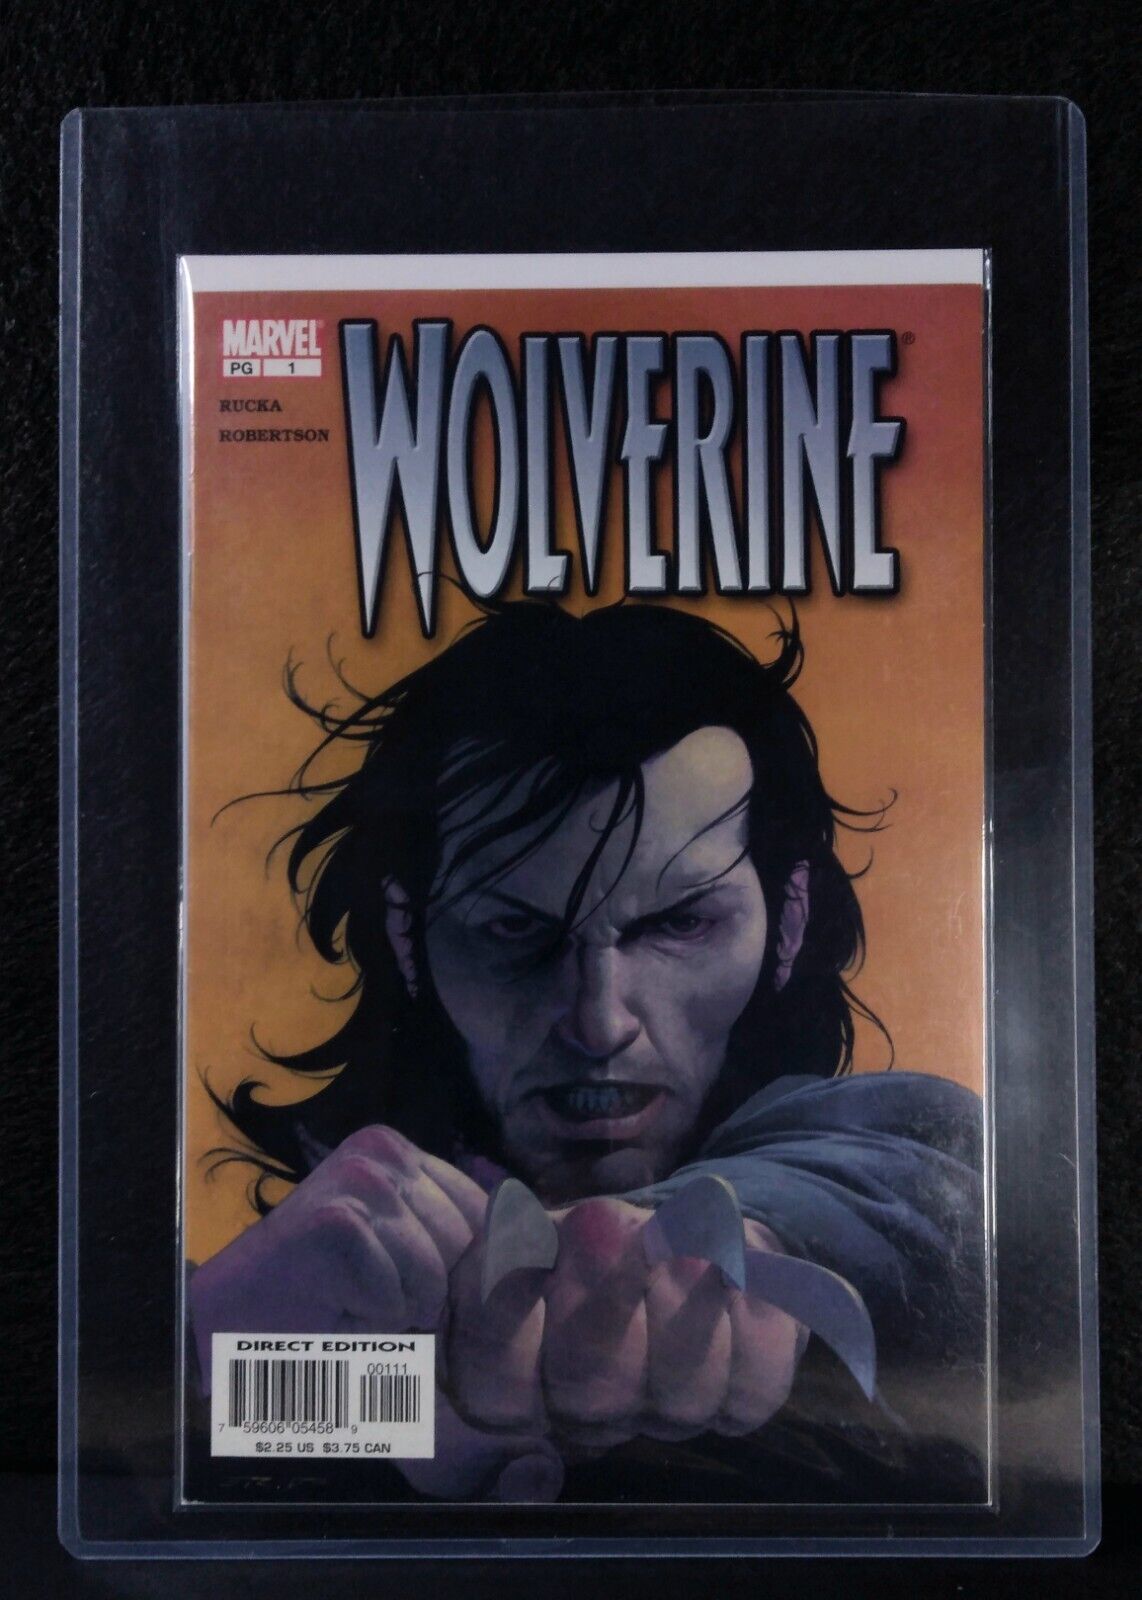 Marvel Wolverine #1 Vol.3 July 2003